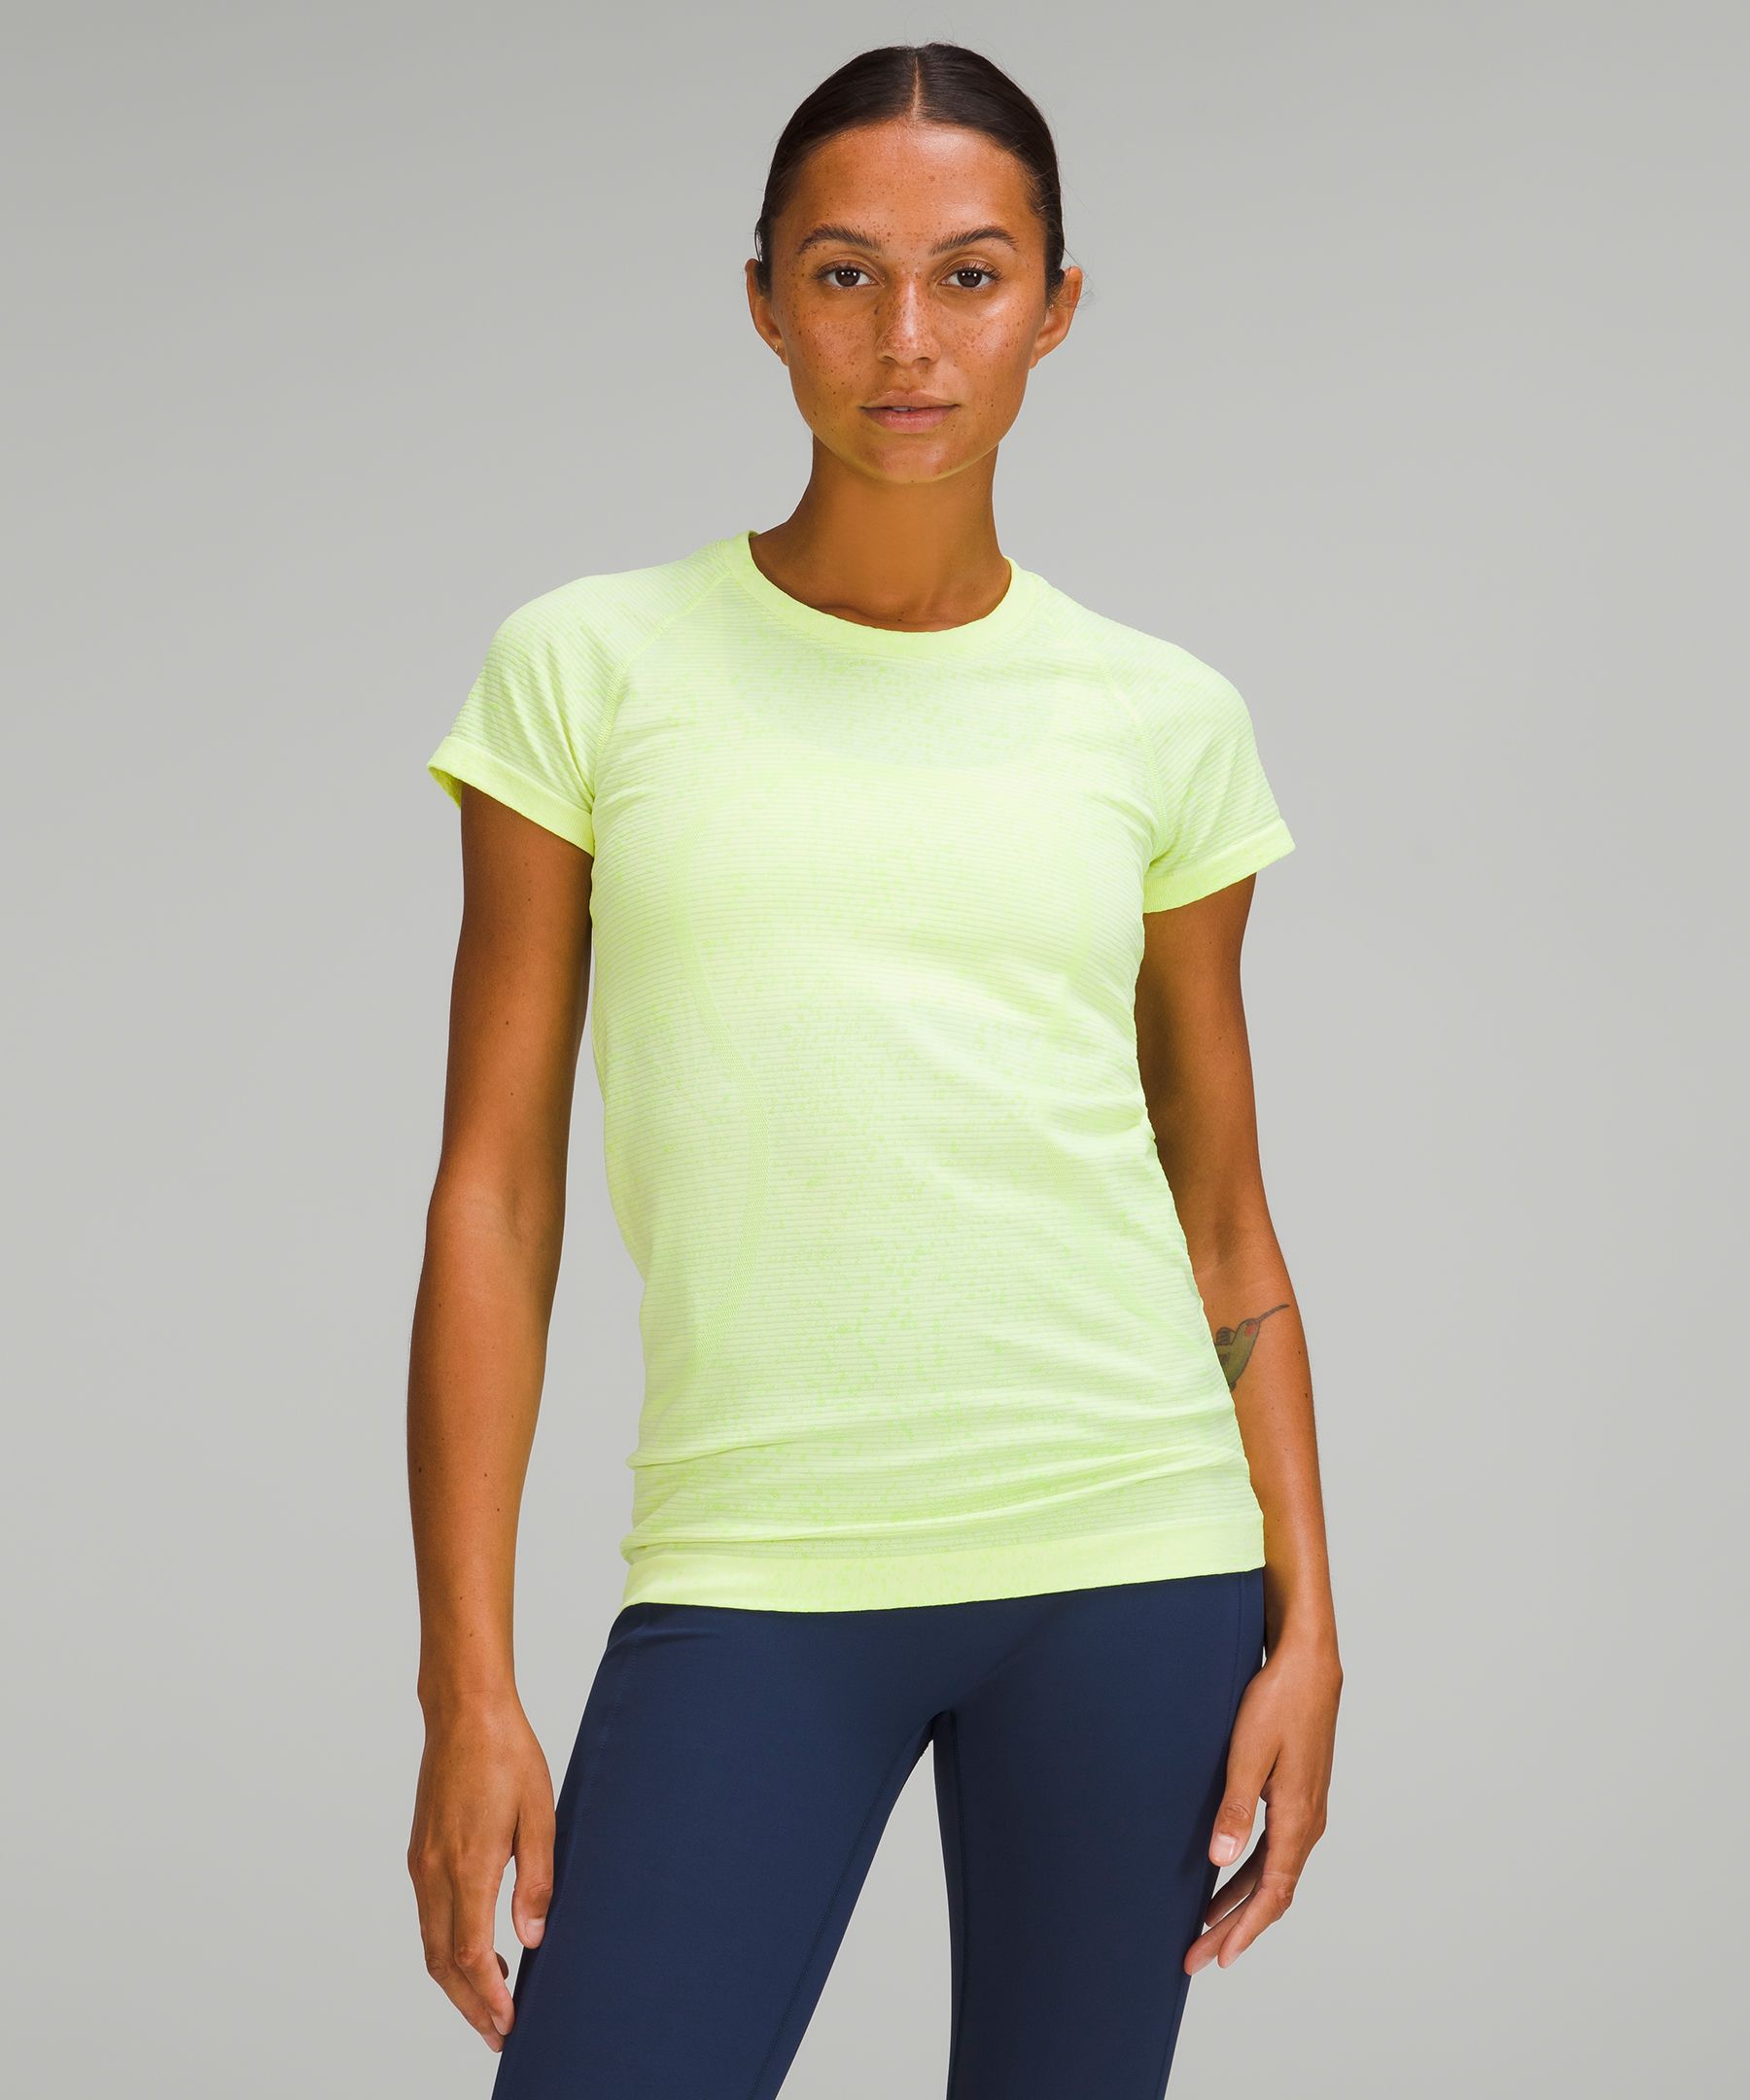 Lululemon Swiftly Tech Short Sleeve Shirt 2.0 In Distorted Noise Neon Lemon Sorbet/highlight Yellow